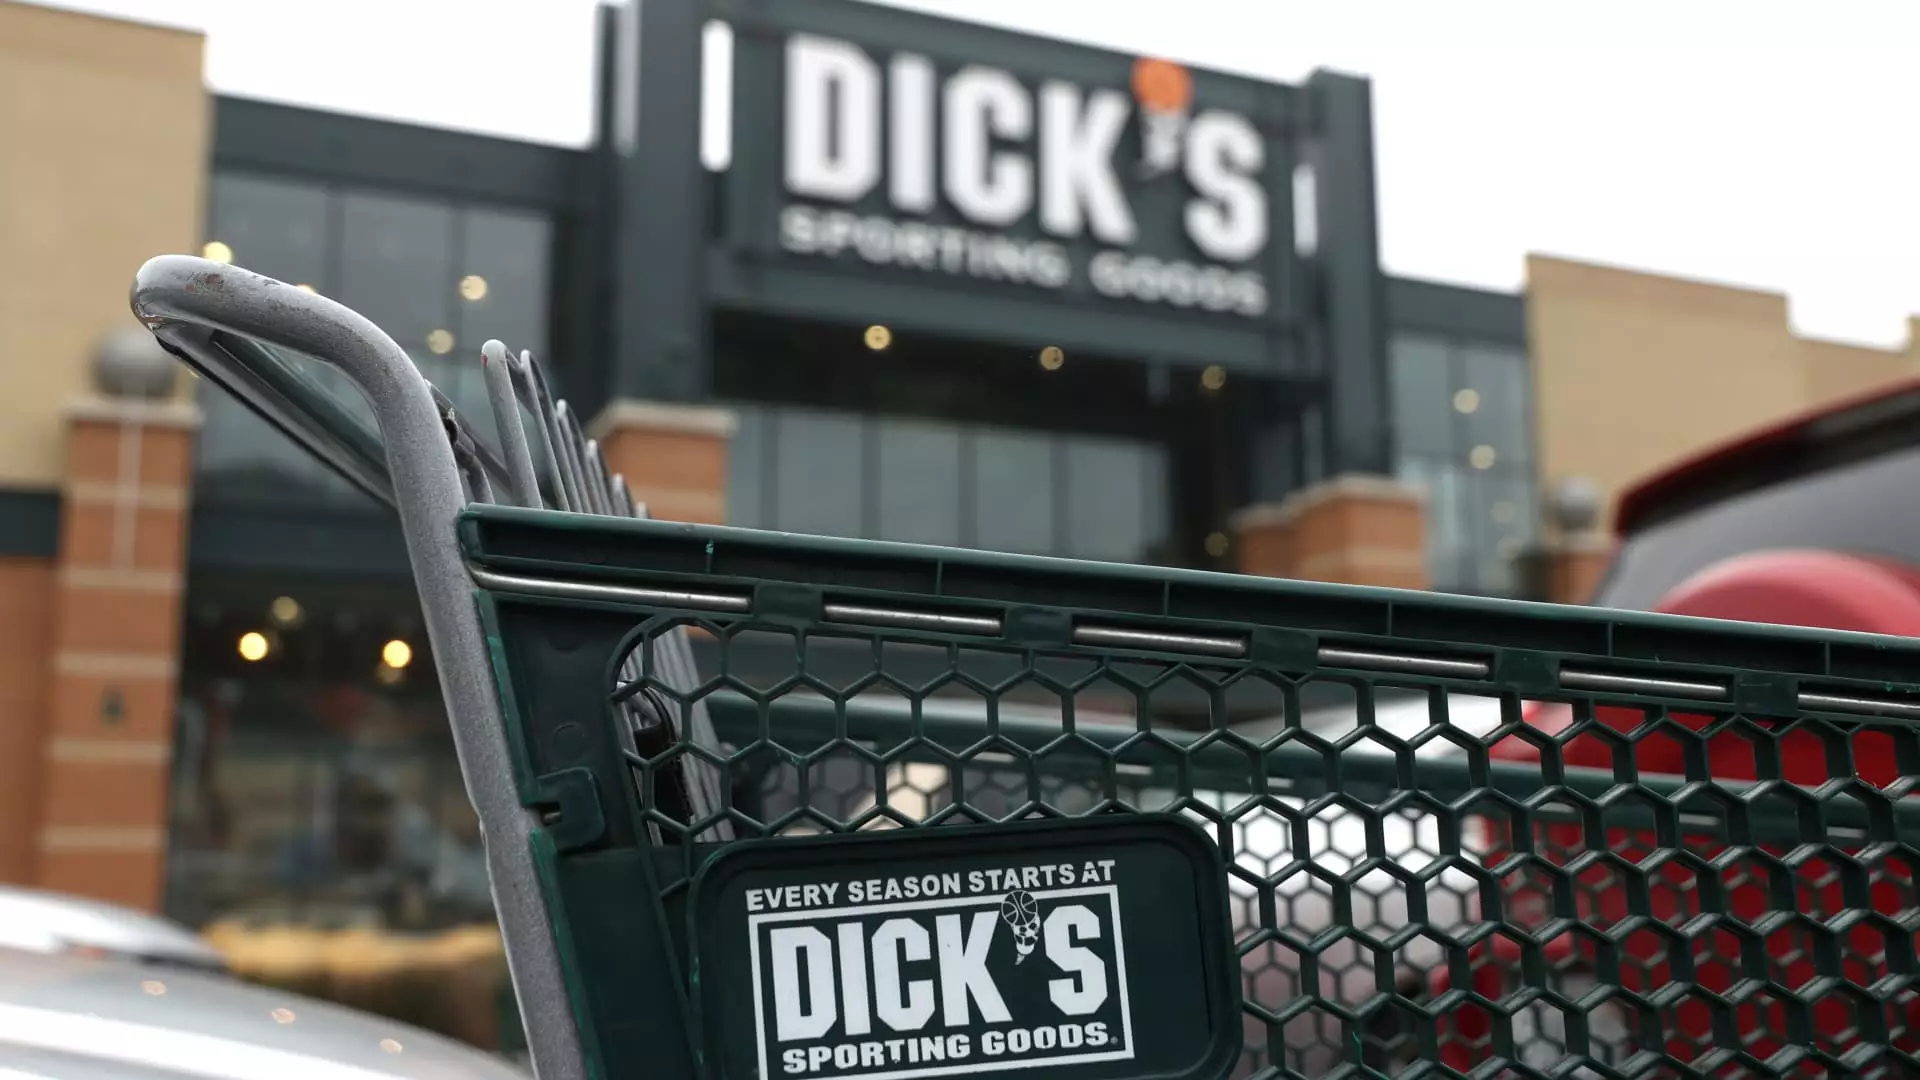 Dick’s Sporting Goods Surpasses Expectations, Raises Earnings Guidance